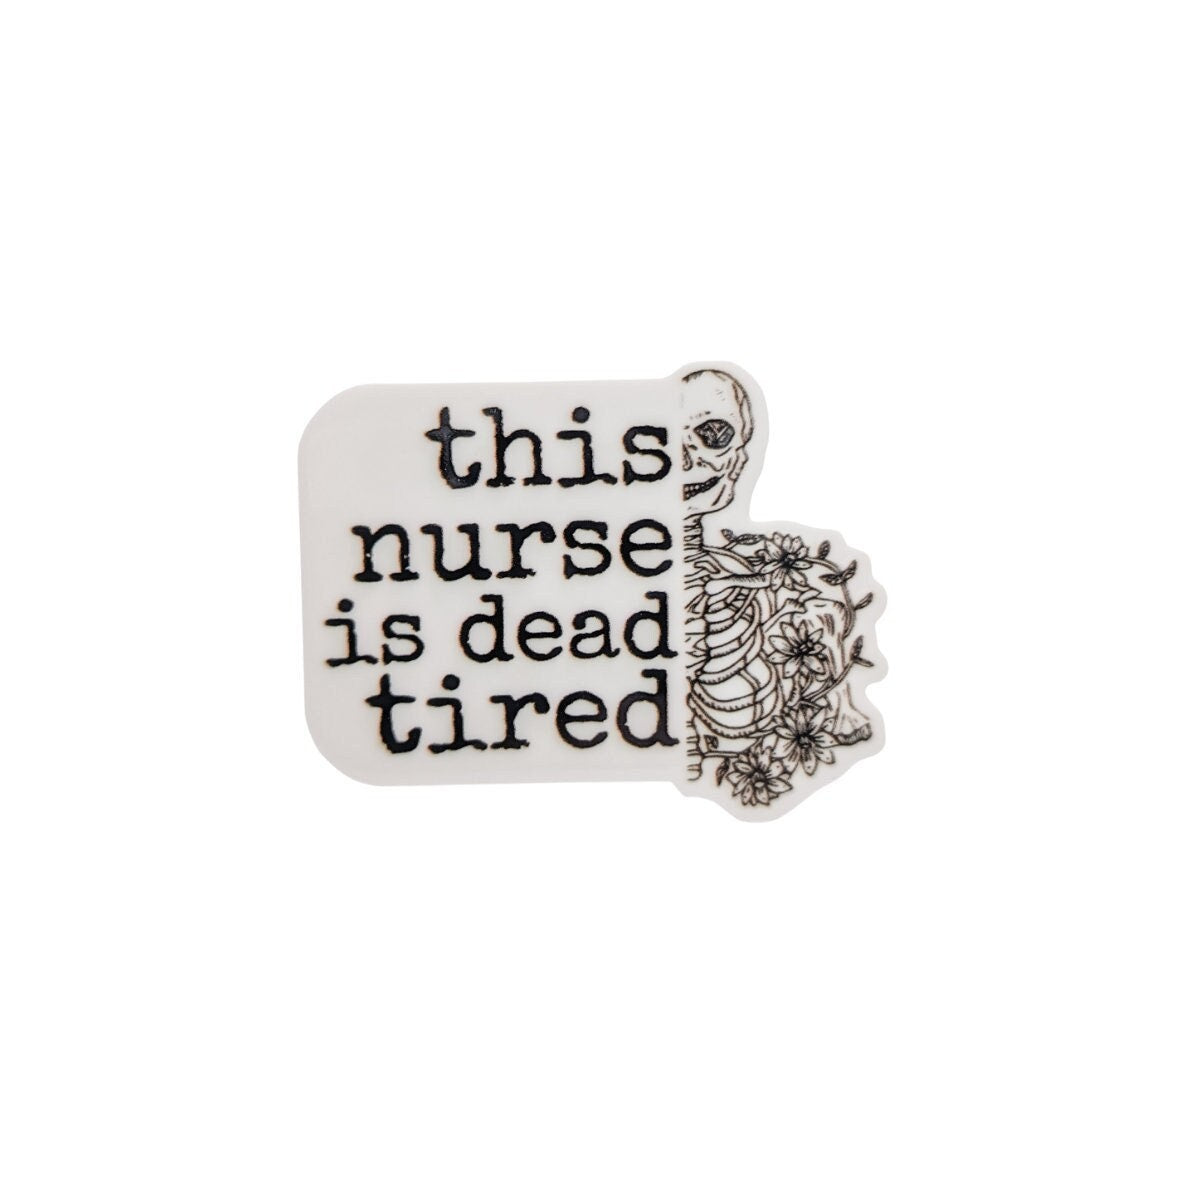 Nurse is Dead Tired / PLASTIC Add on